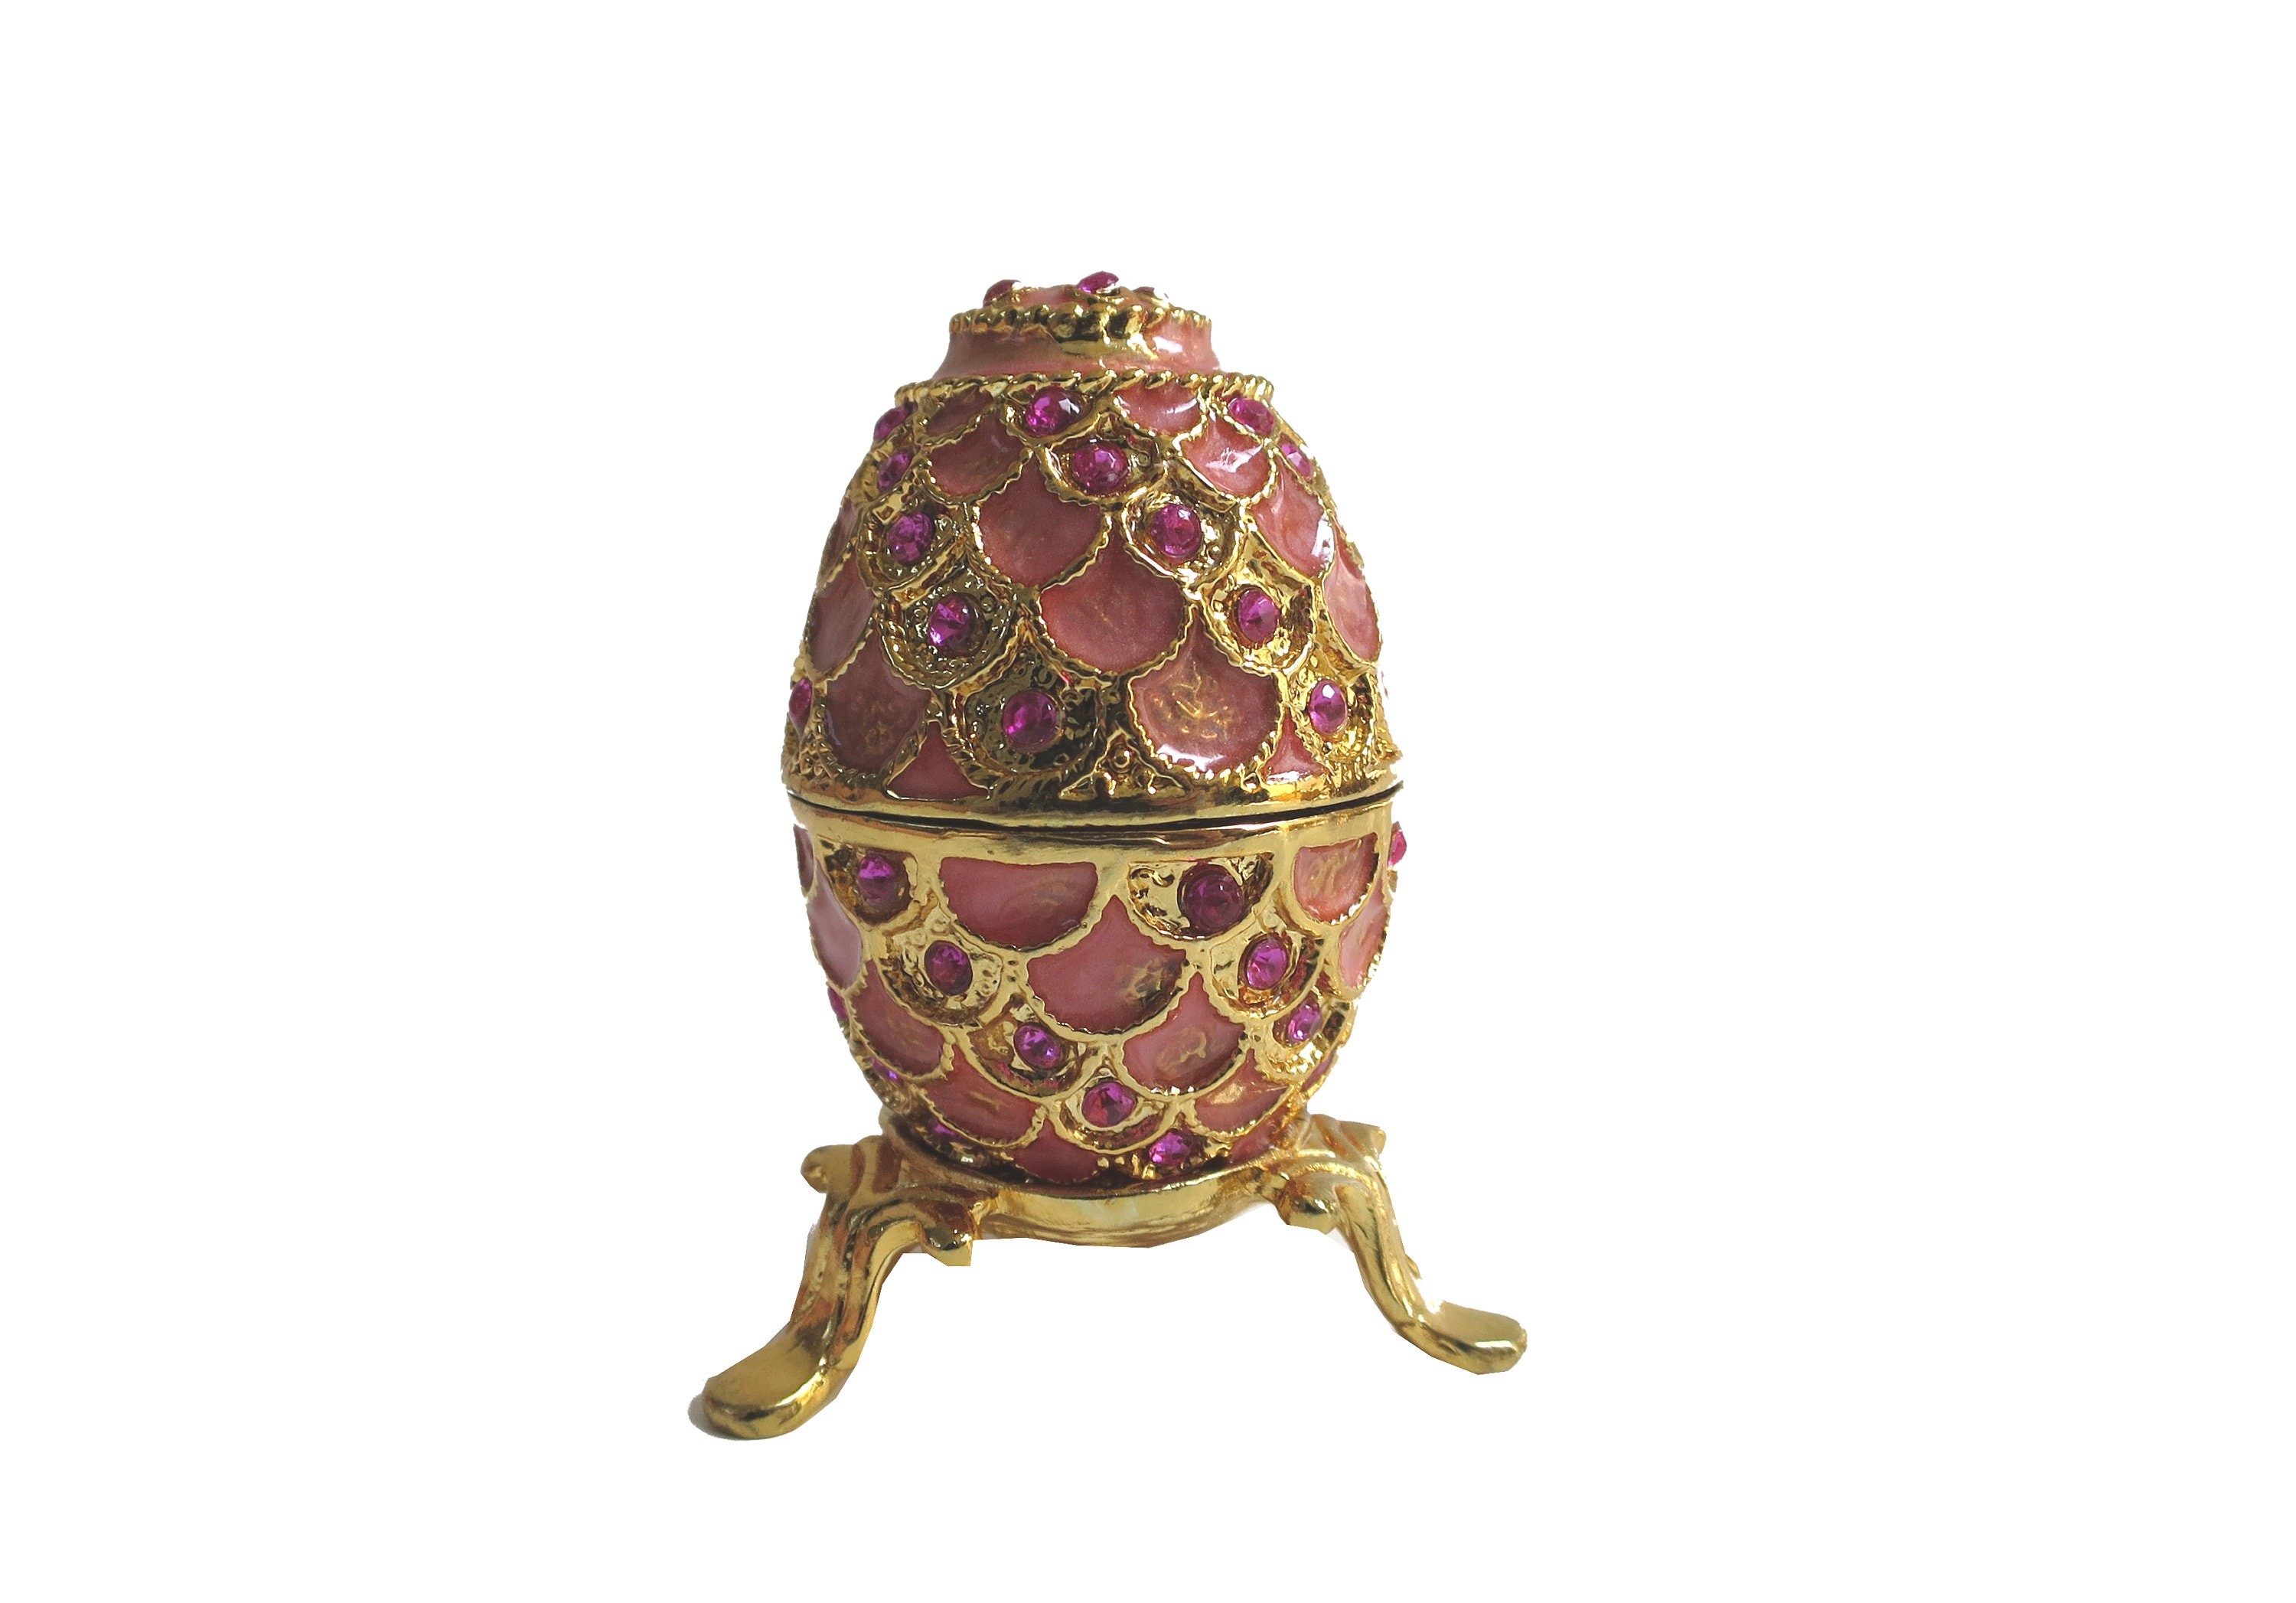 Lucky Golden Lion Trinket Box HANDMADE DESIGNER Faberge egg trinket style  200 Crystal Diamonds Hands…See more Lucky Golden Lion Trinket Box HANDMADE